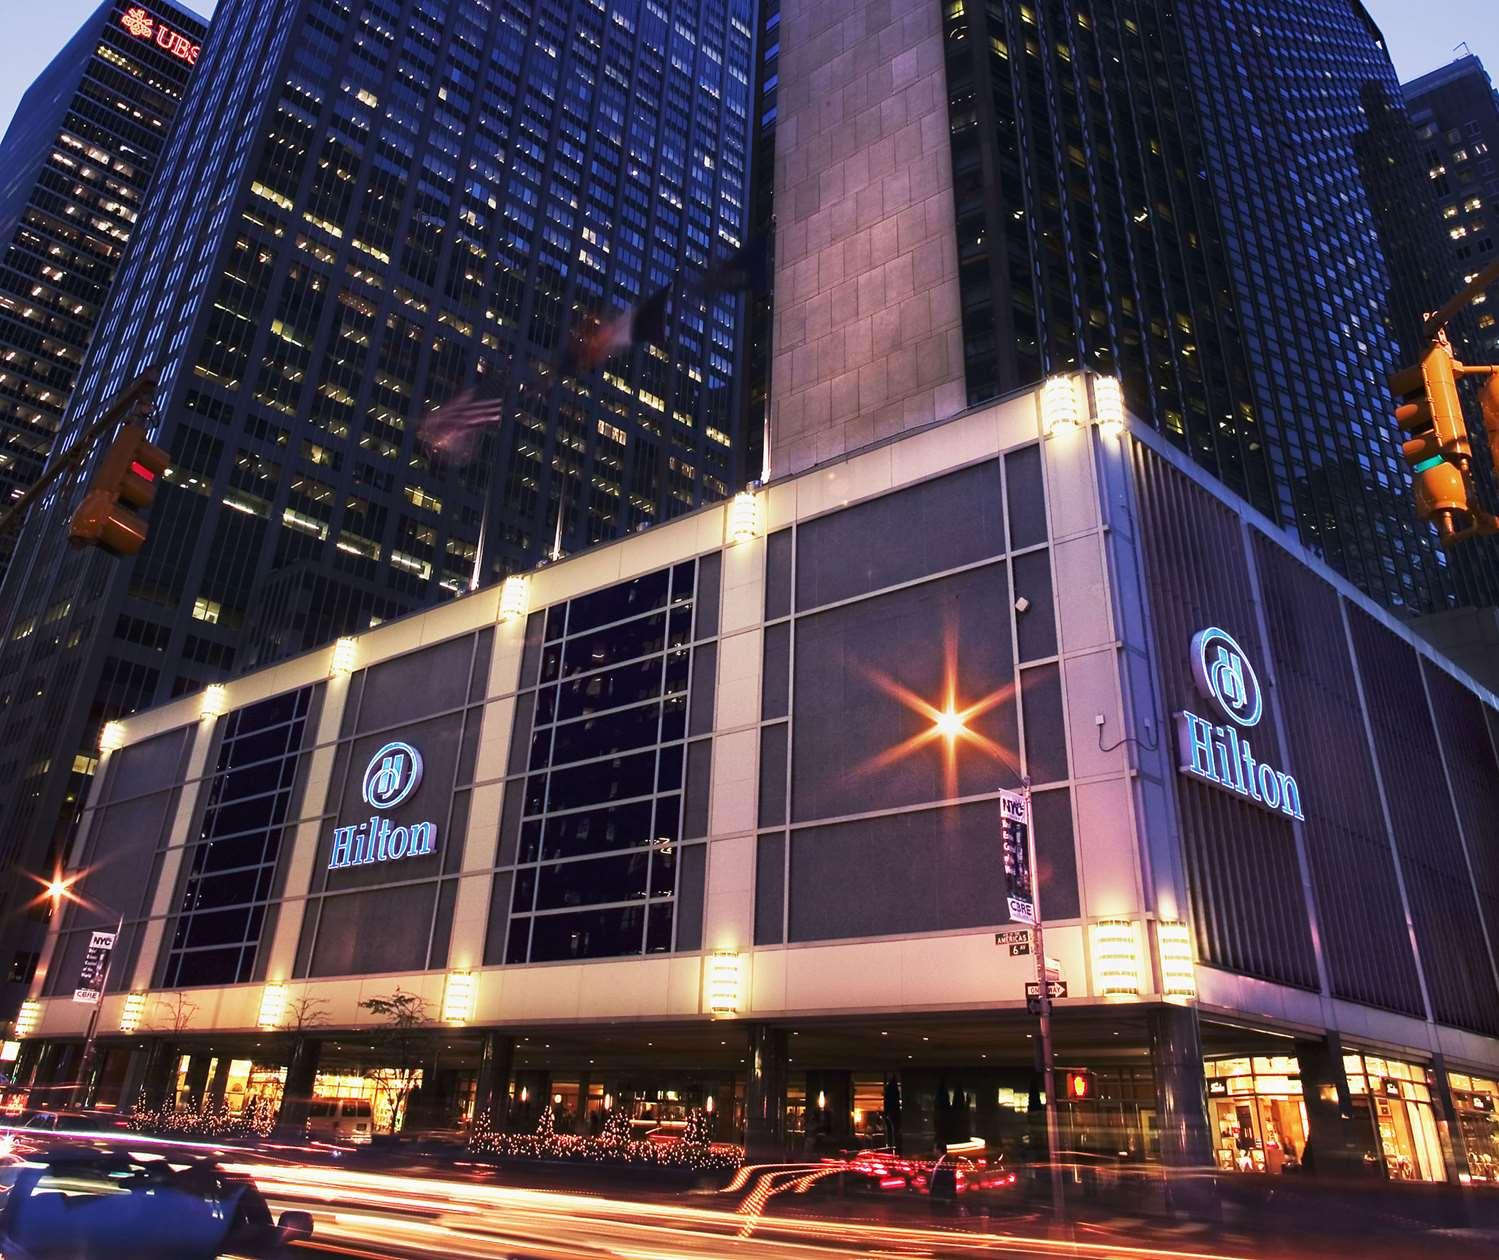 Hilton Club The Residences New York in New York, NY